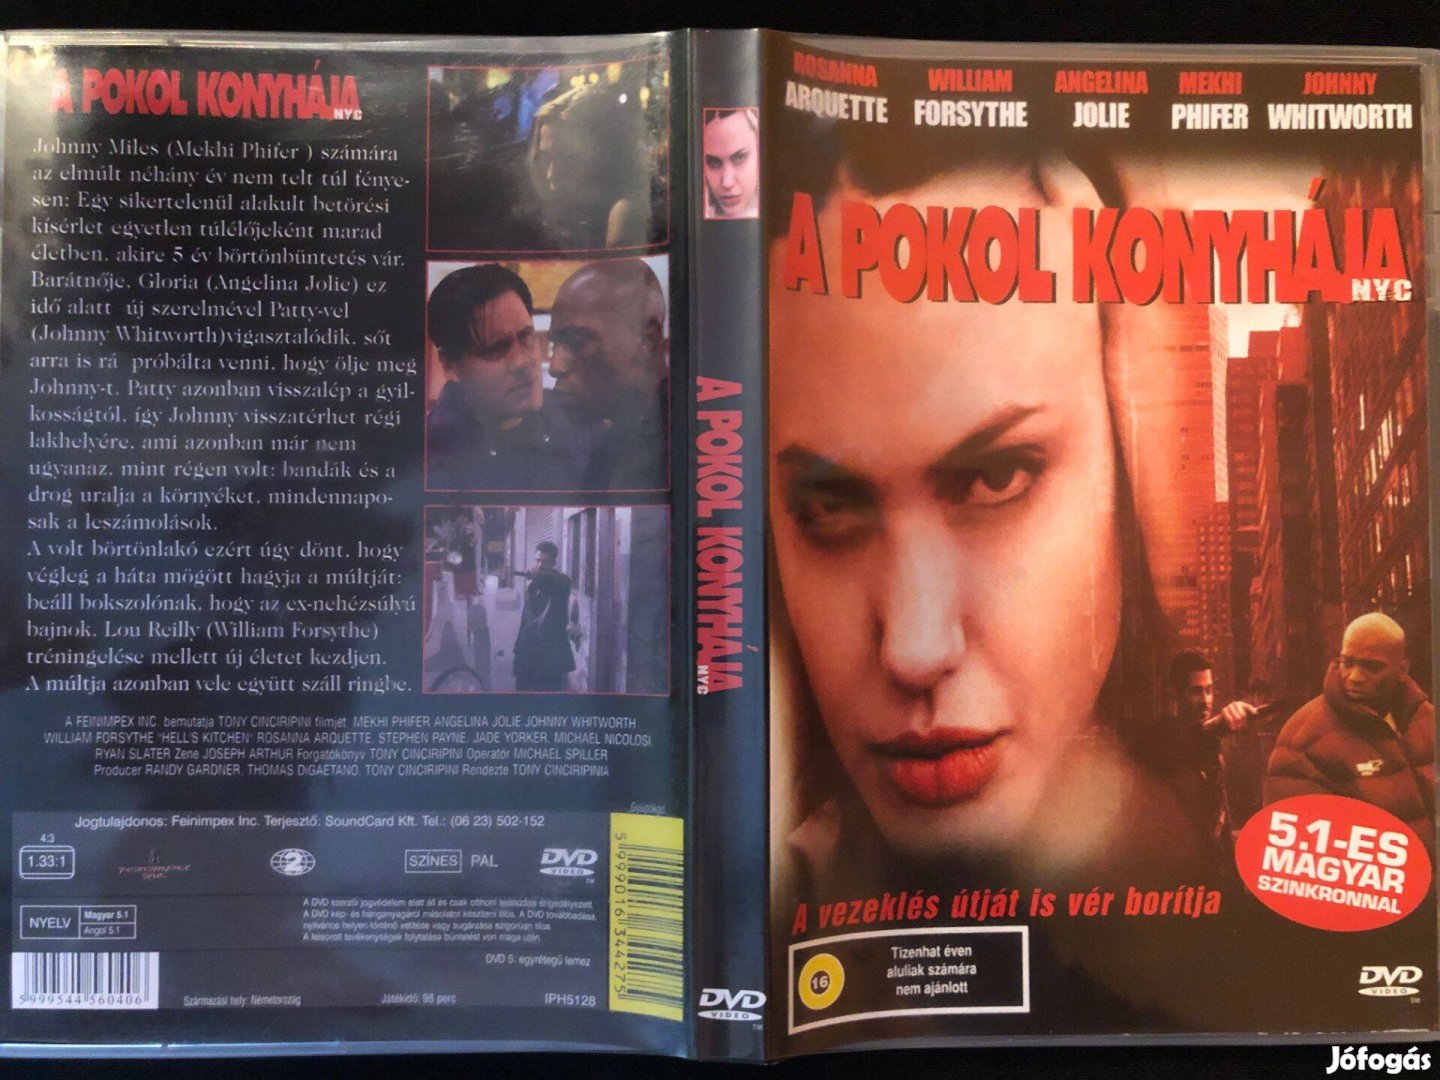 A pokol konyhája DVD (karcmentes, Angelina Jolie, Rosanna Arquette)